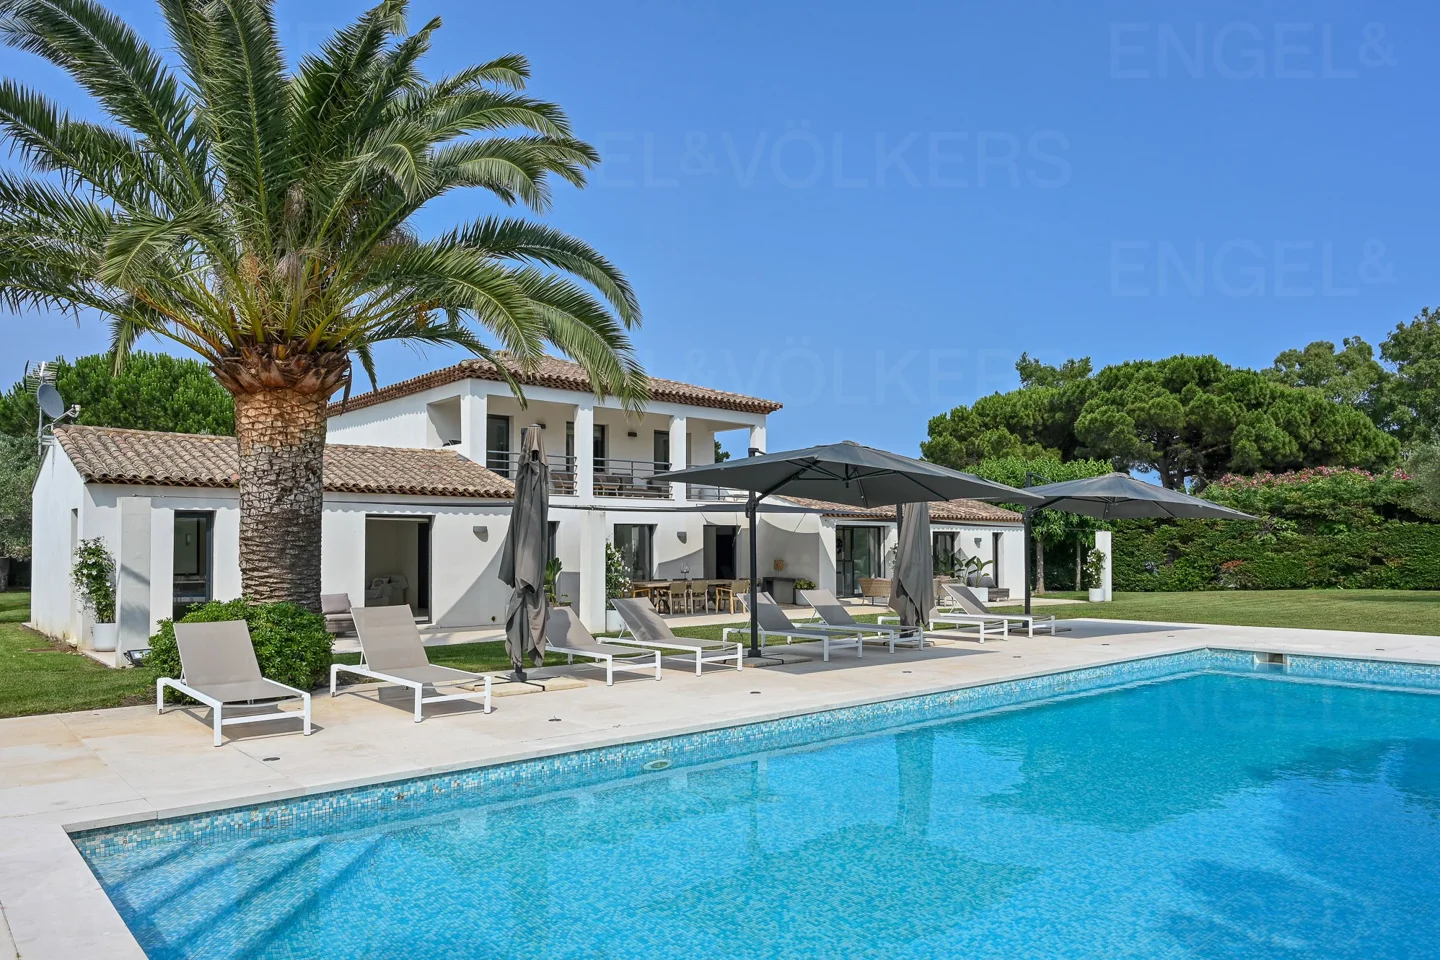 Villa in a sought-after area of Saint Tropez